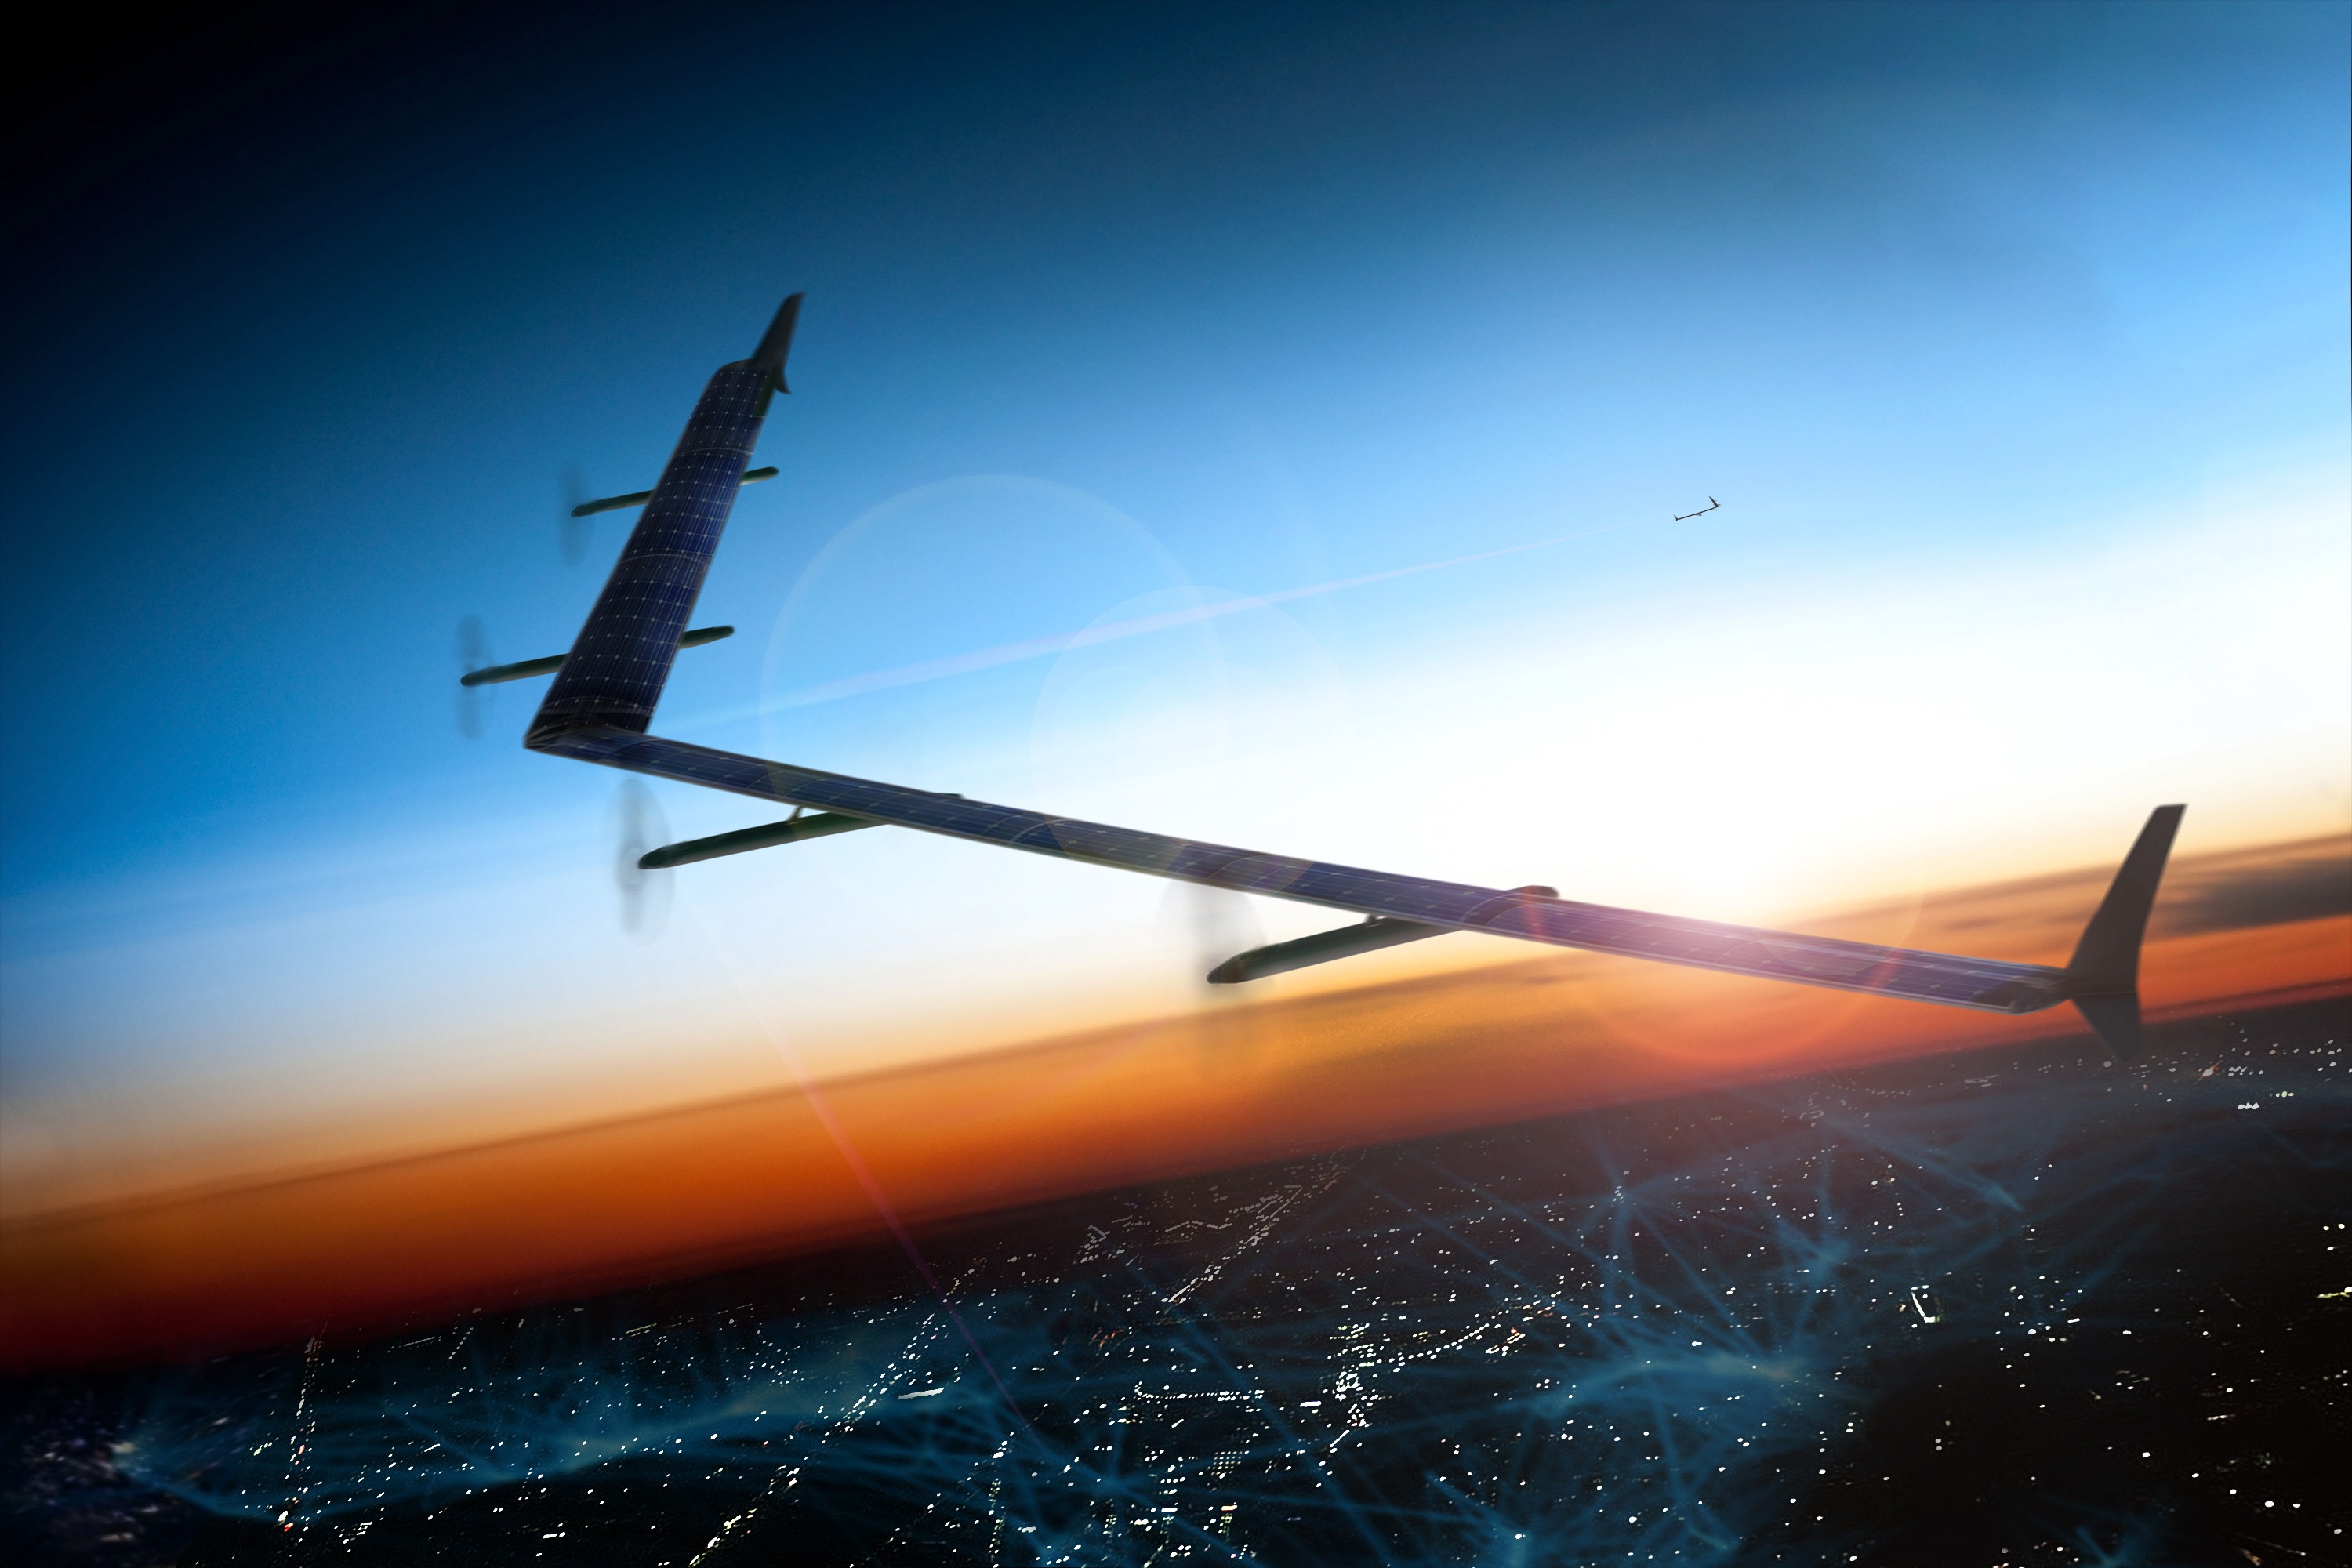 Facebook touts huge solar-powered drone - Fox News